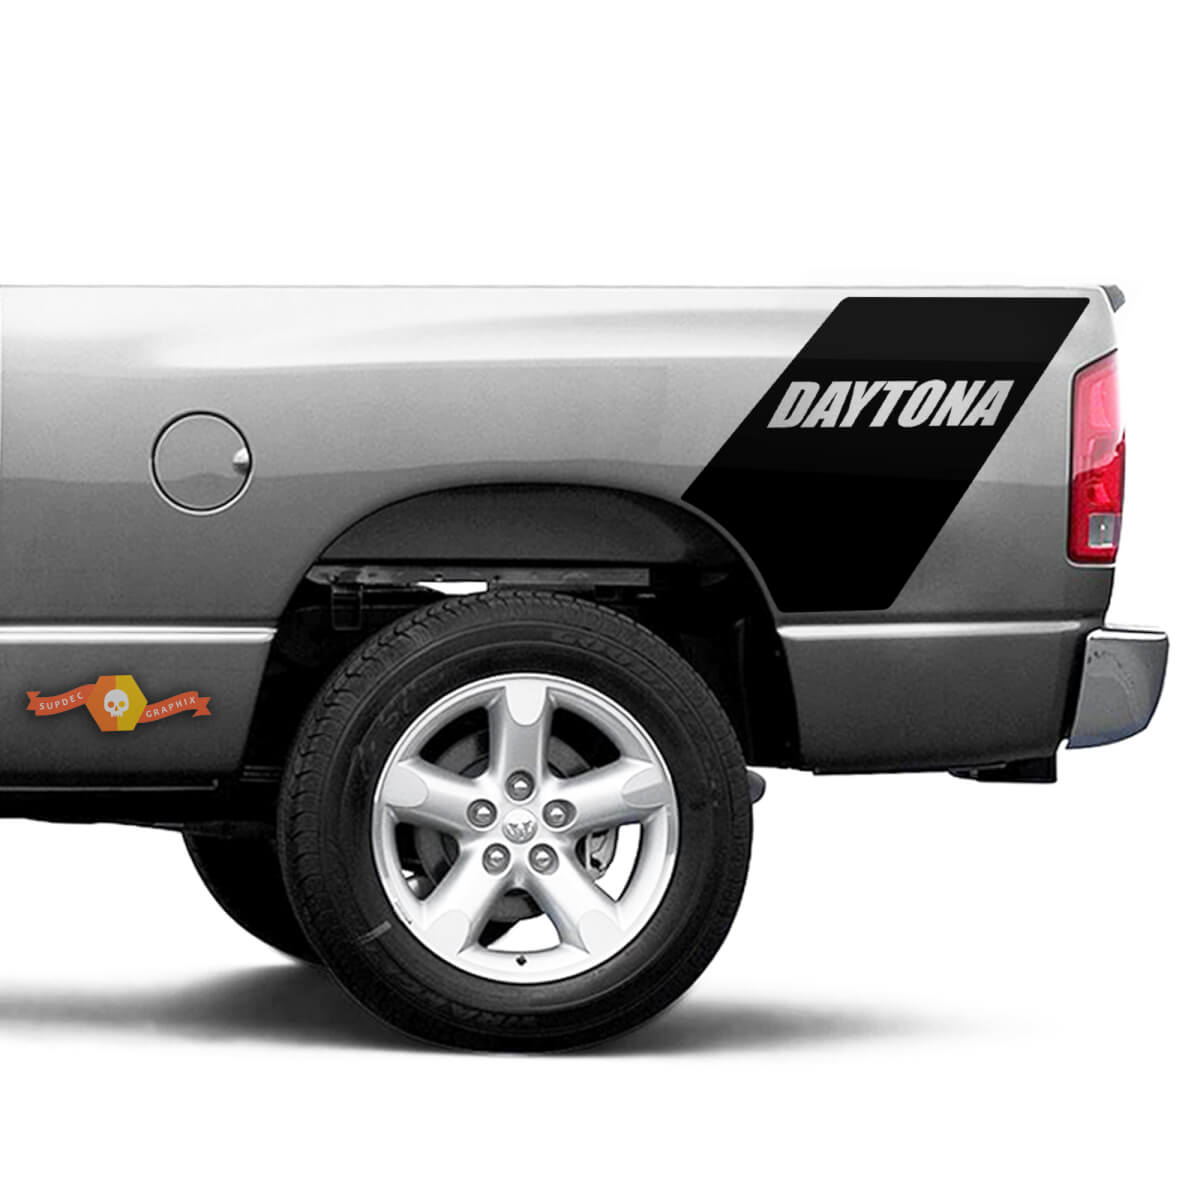 Daytona Dodge Ram 1500 Bed Side Racing Heckstreifen Vinyl-Aufkleber